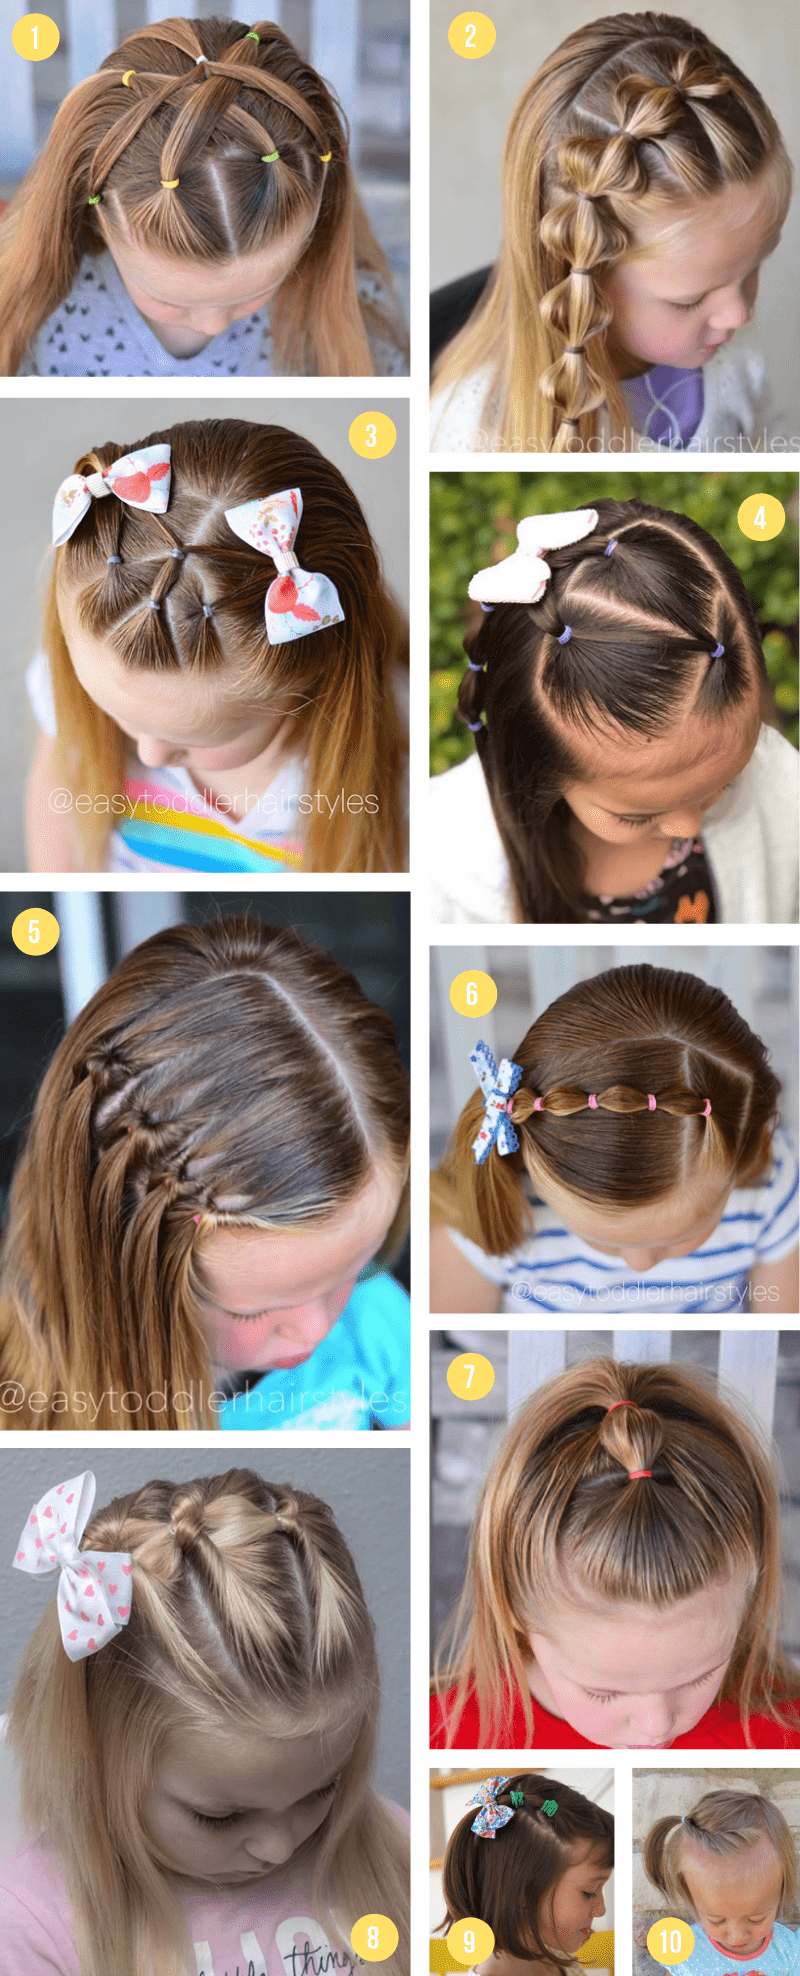 Easy Girls Hairstyles For Toddlers Tweens Teens What